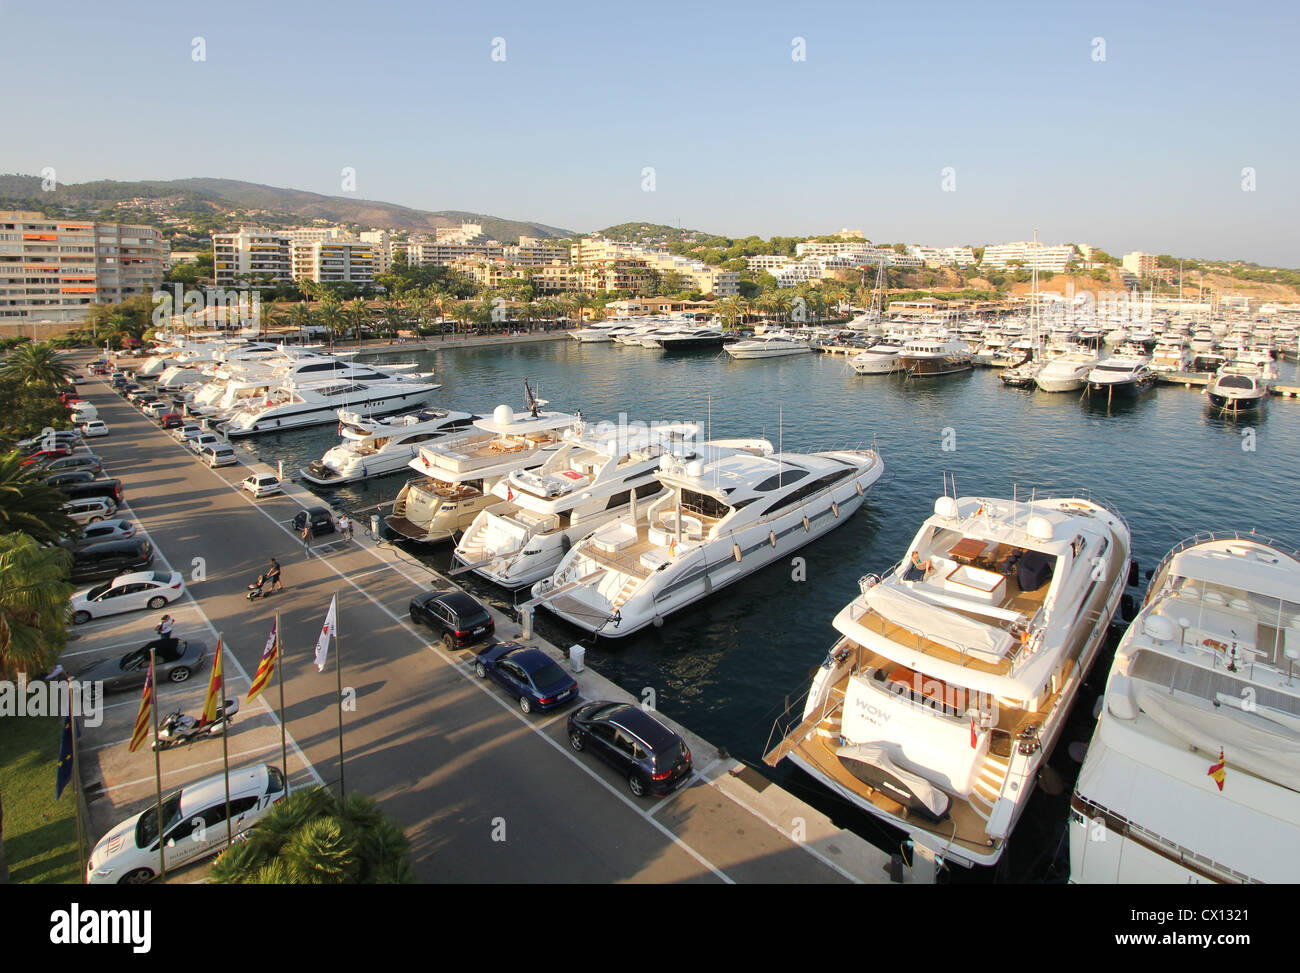 Puerto Portals Marina at late afternoon - luxury superyachts + restaurants + boutiques - Calvia, South West Mallorca / Majorca Stock Photo